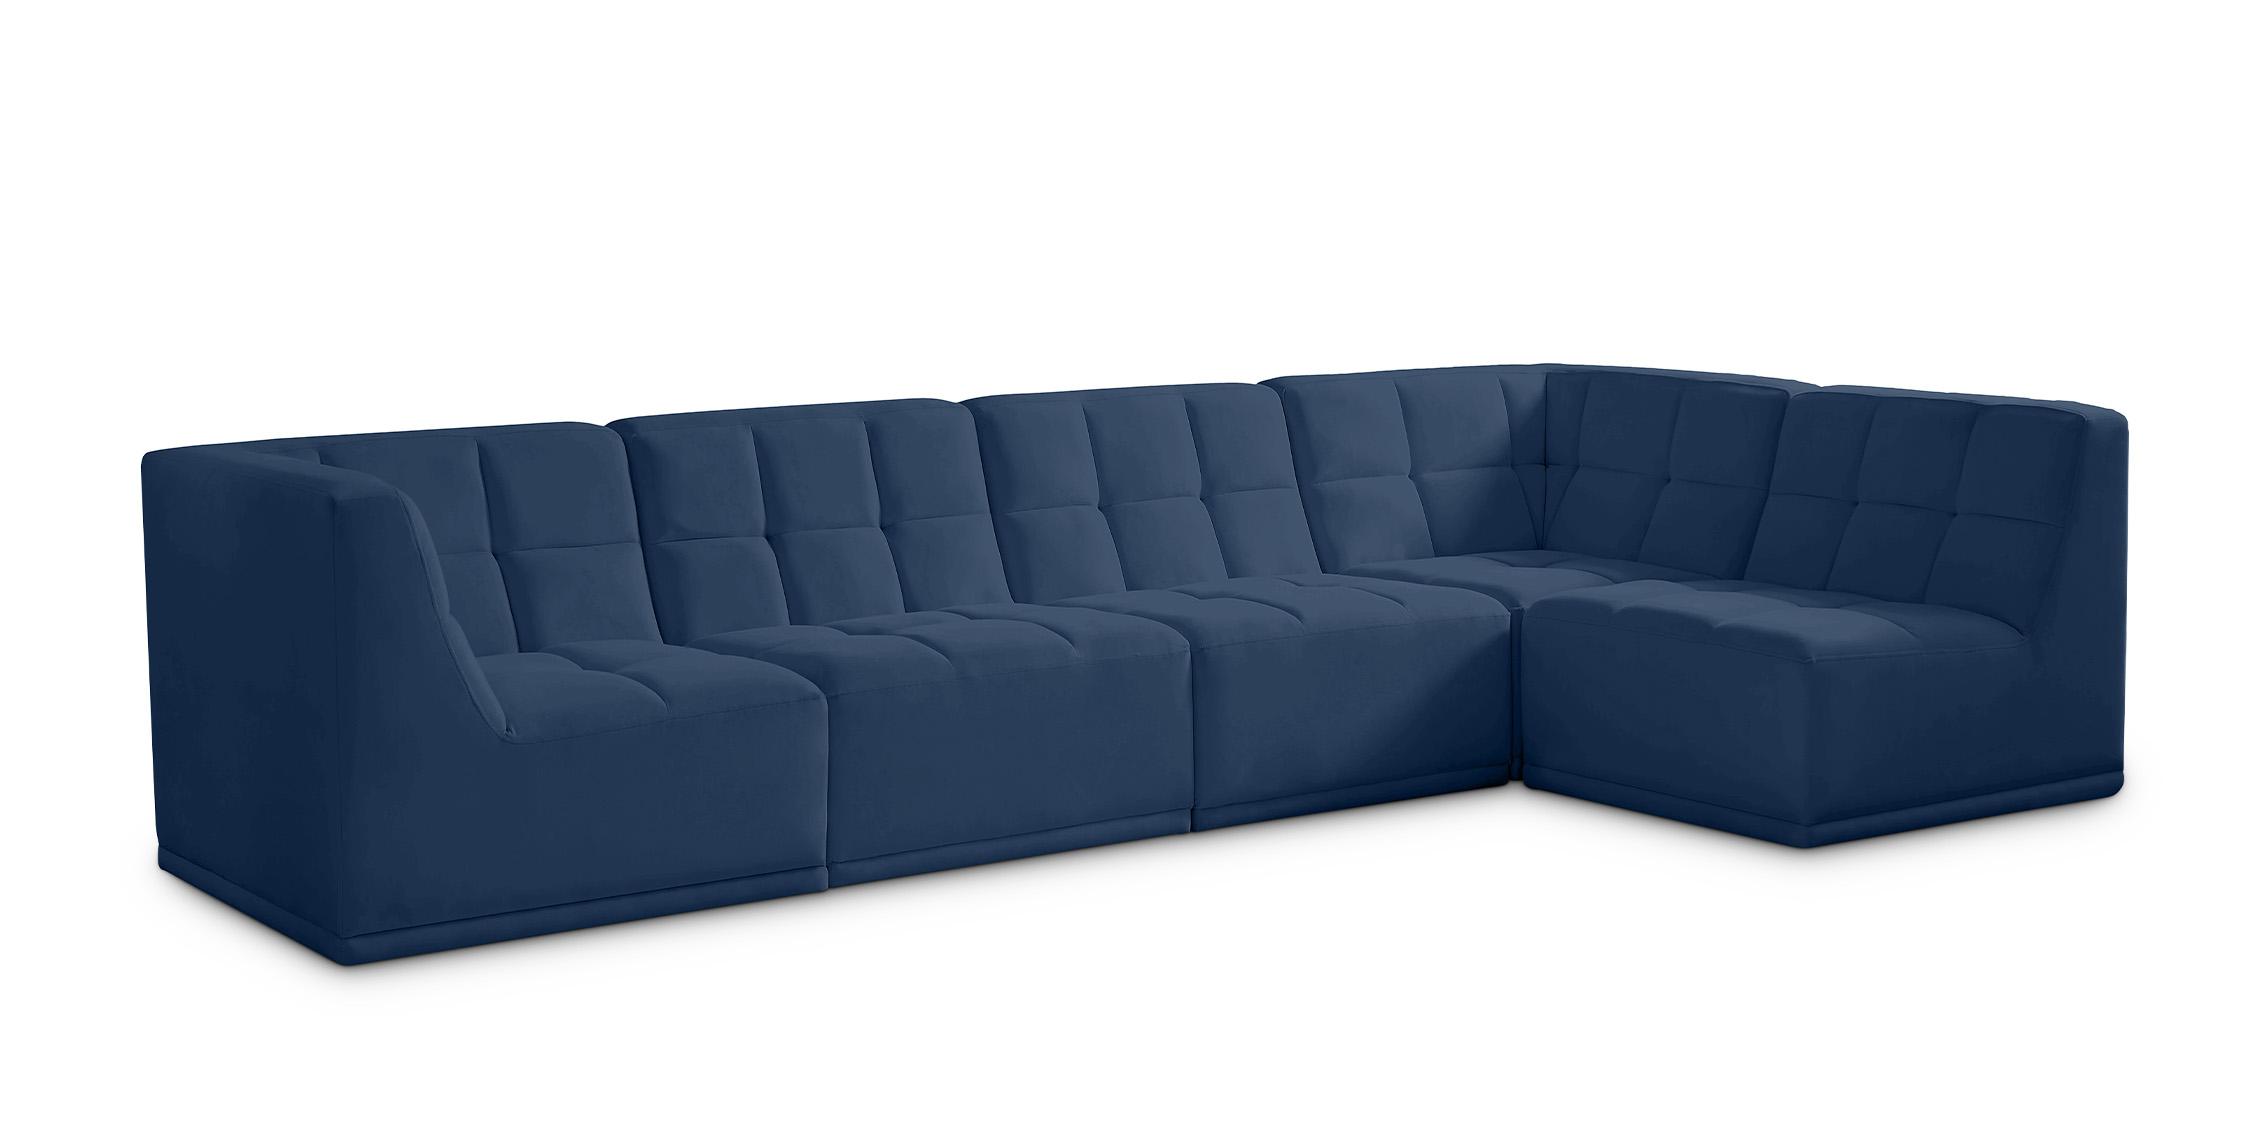 

    
Meridian Furniture RELAX 650Navy-Sec5A Modular Sectional Navy 650Navy-Sec5A
